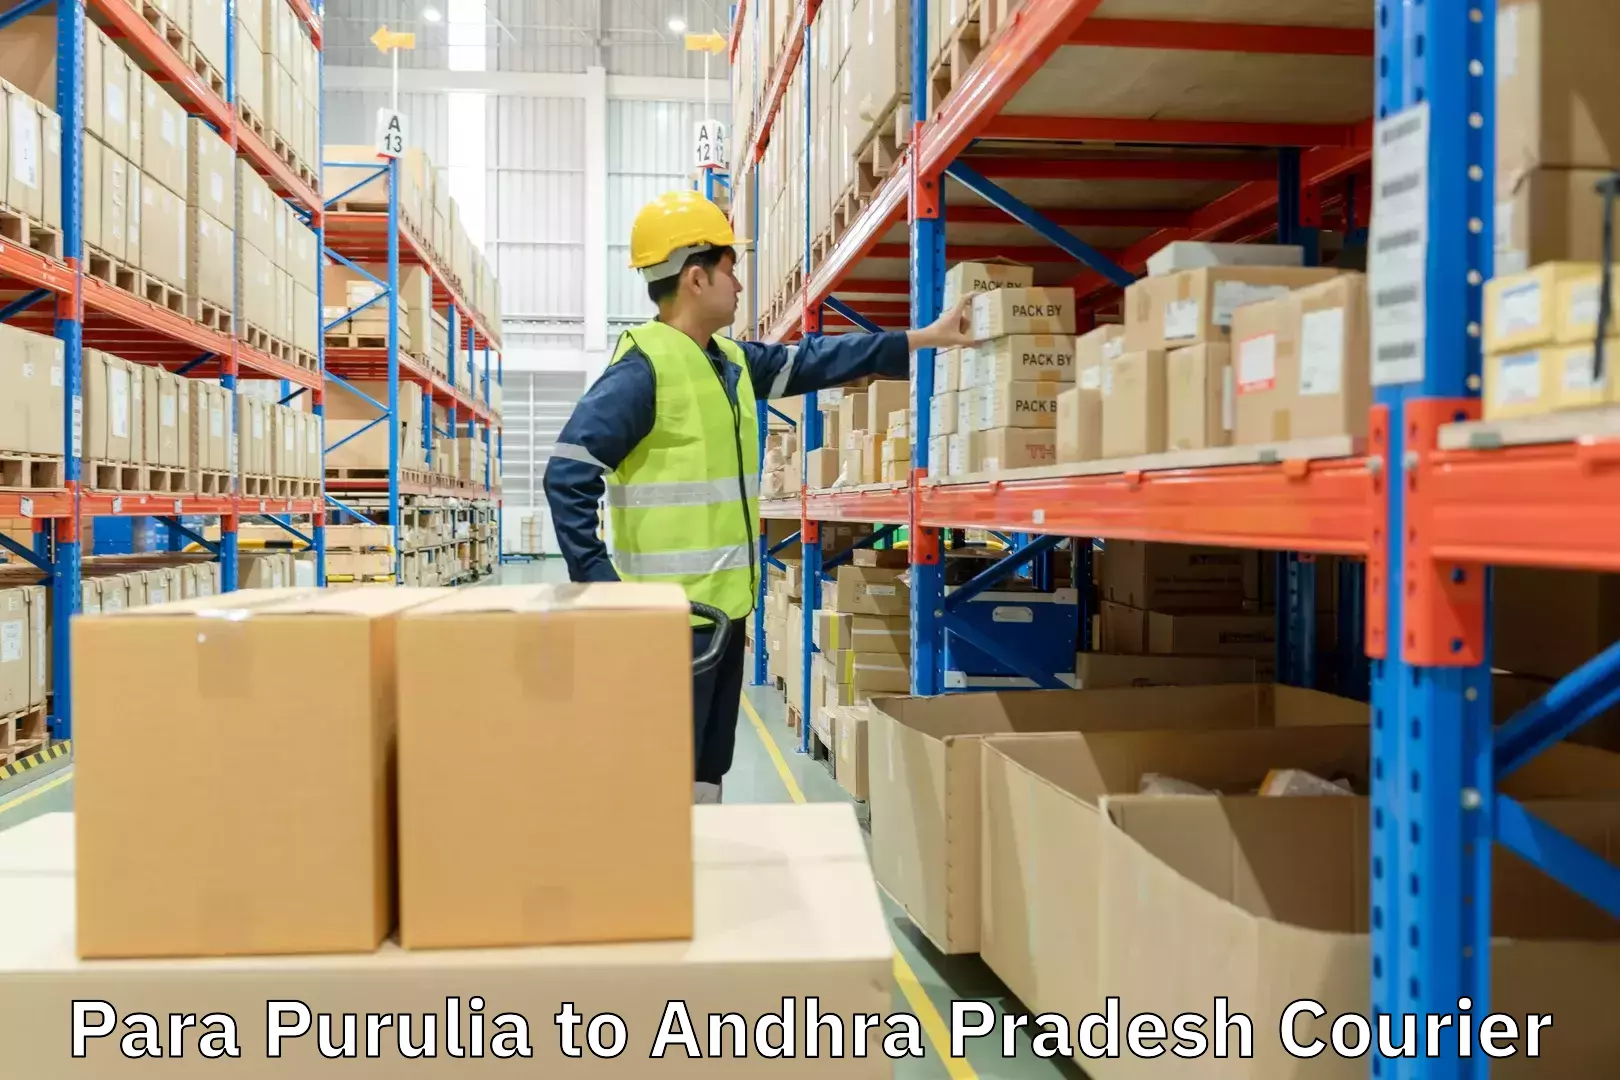 Express delivery network Para Purulia to Andhra Pradesh